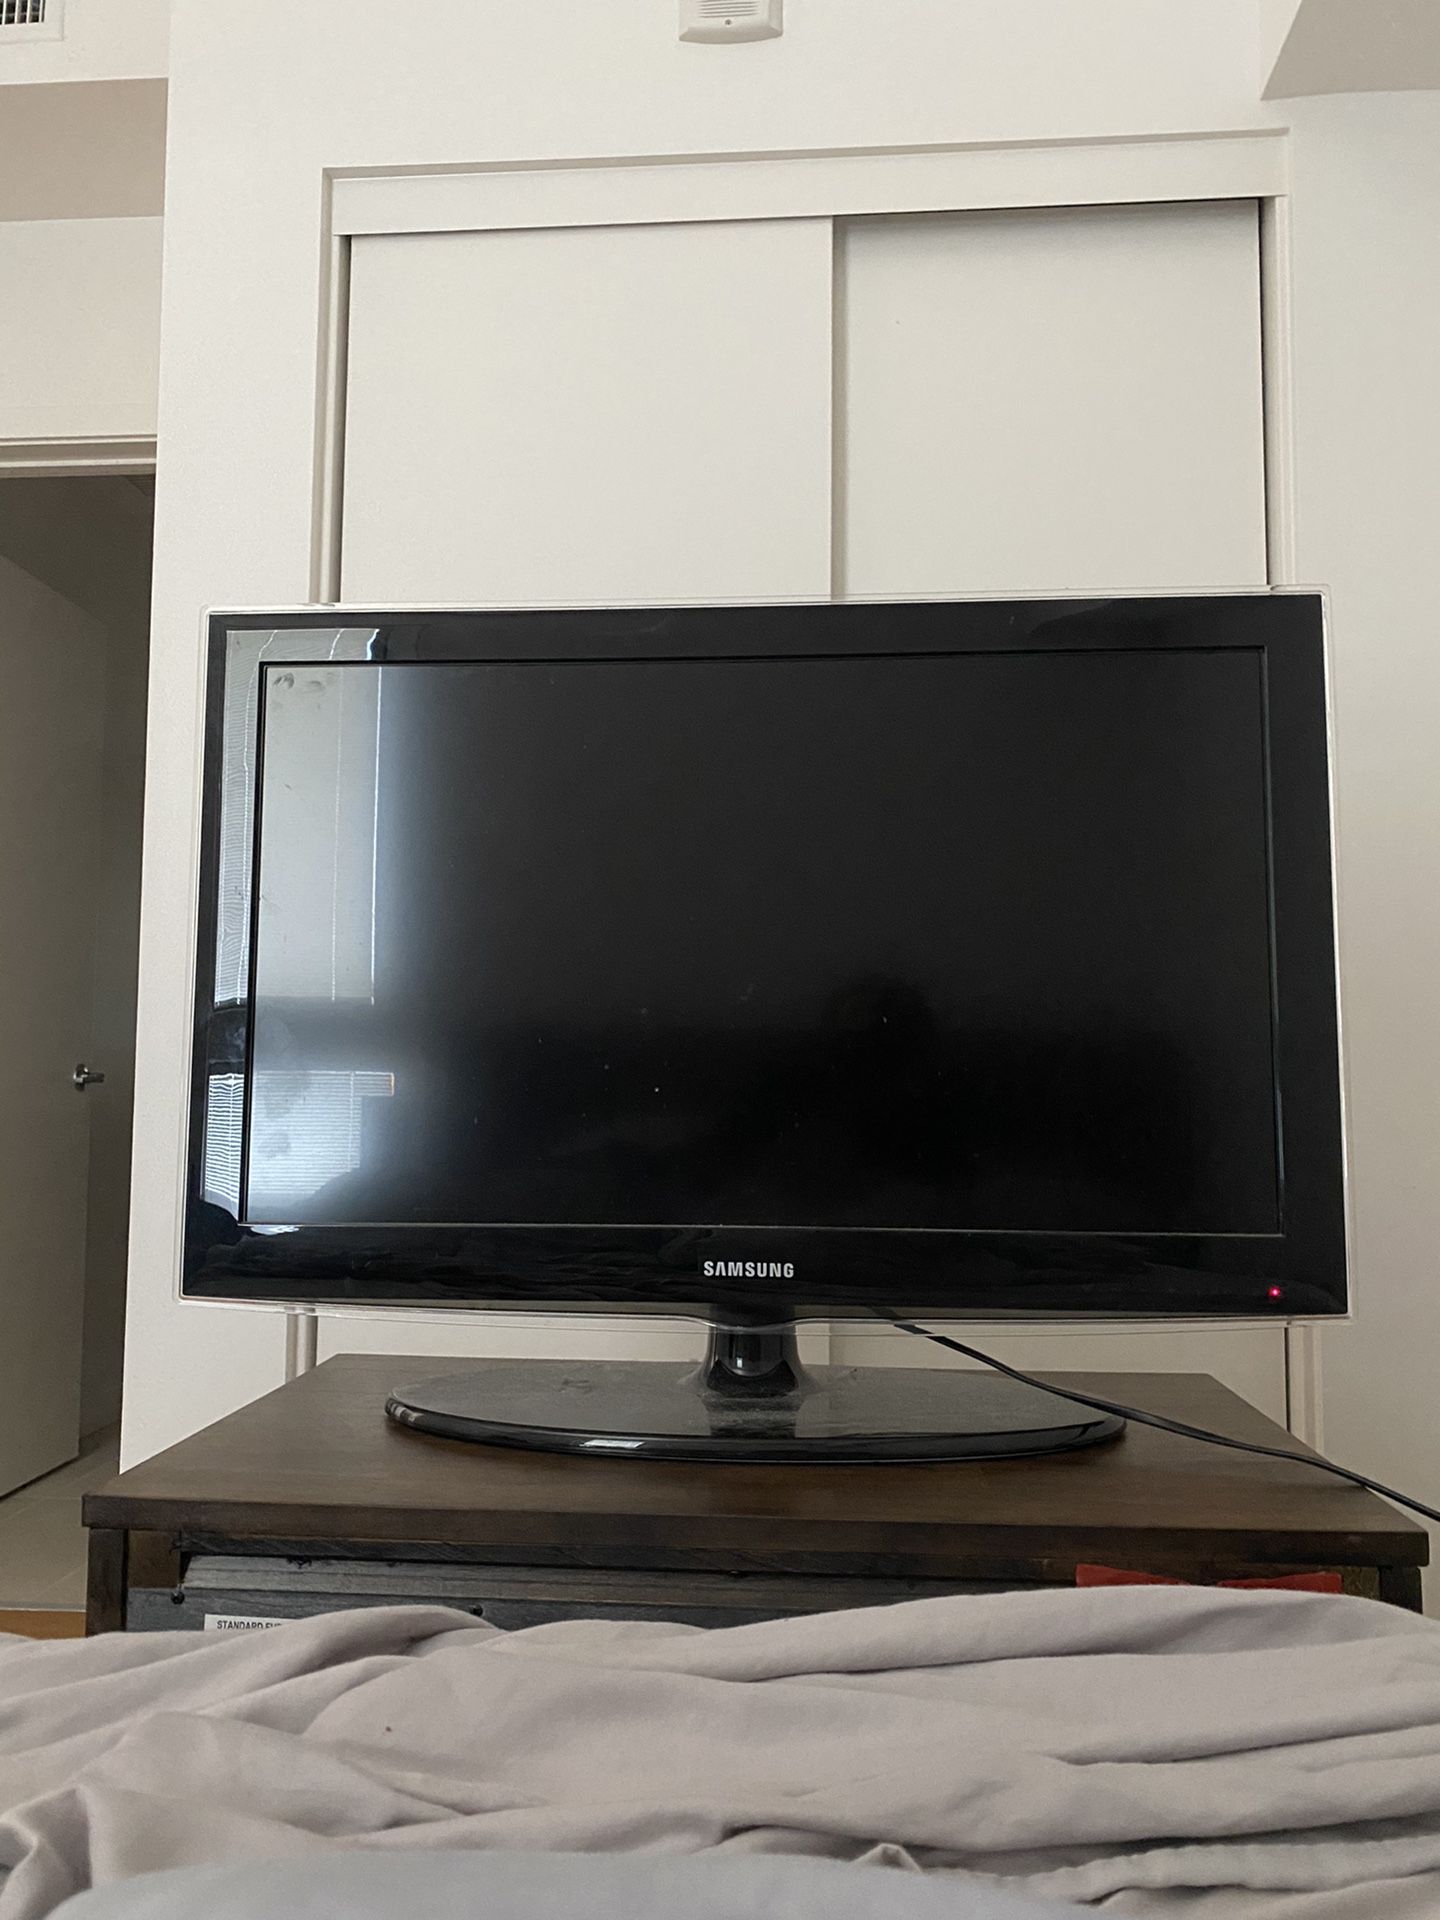 Samsung 27’ Flatscreen TV